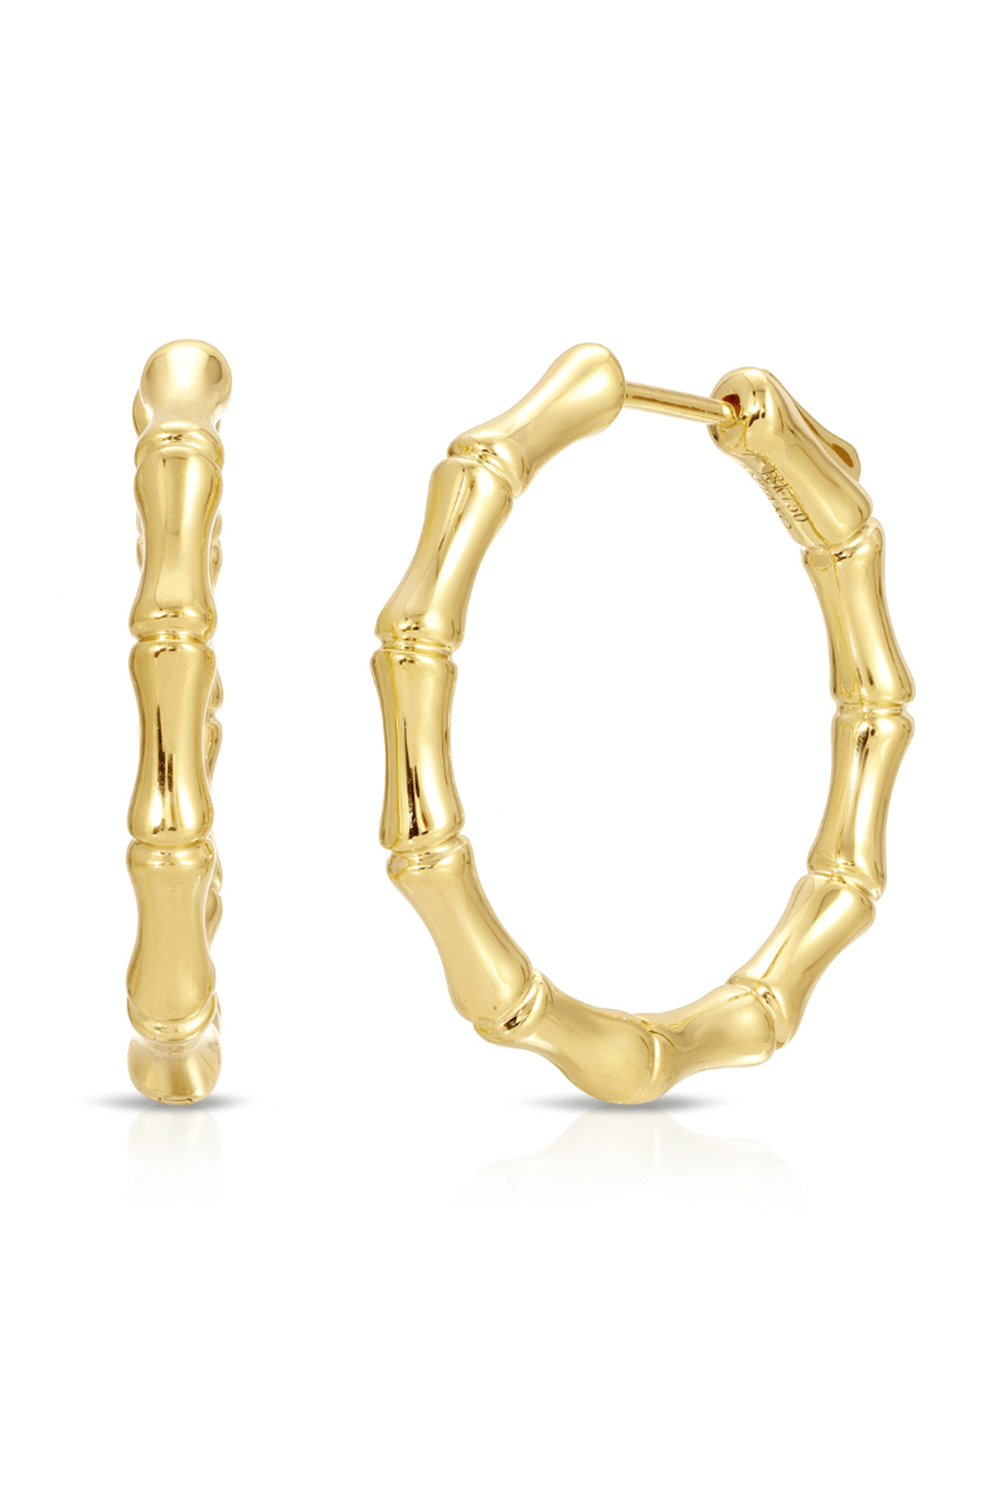 ANITA KO-Bamboo Hoop Earrings-YELLOW GOLD